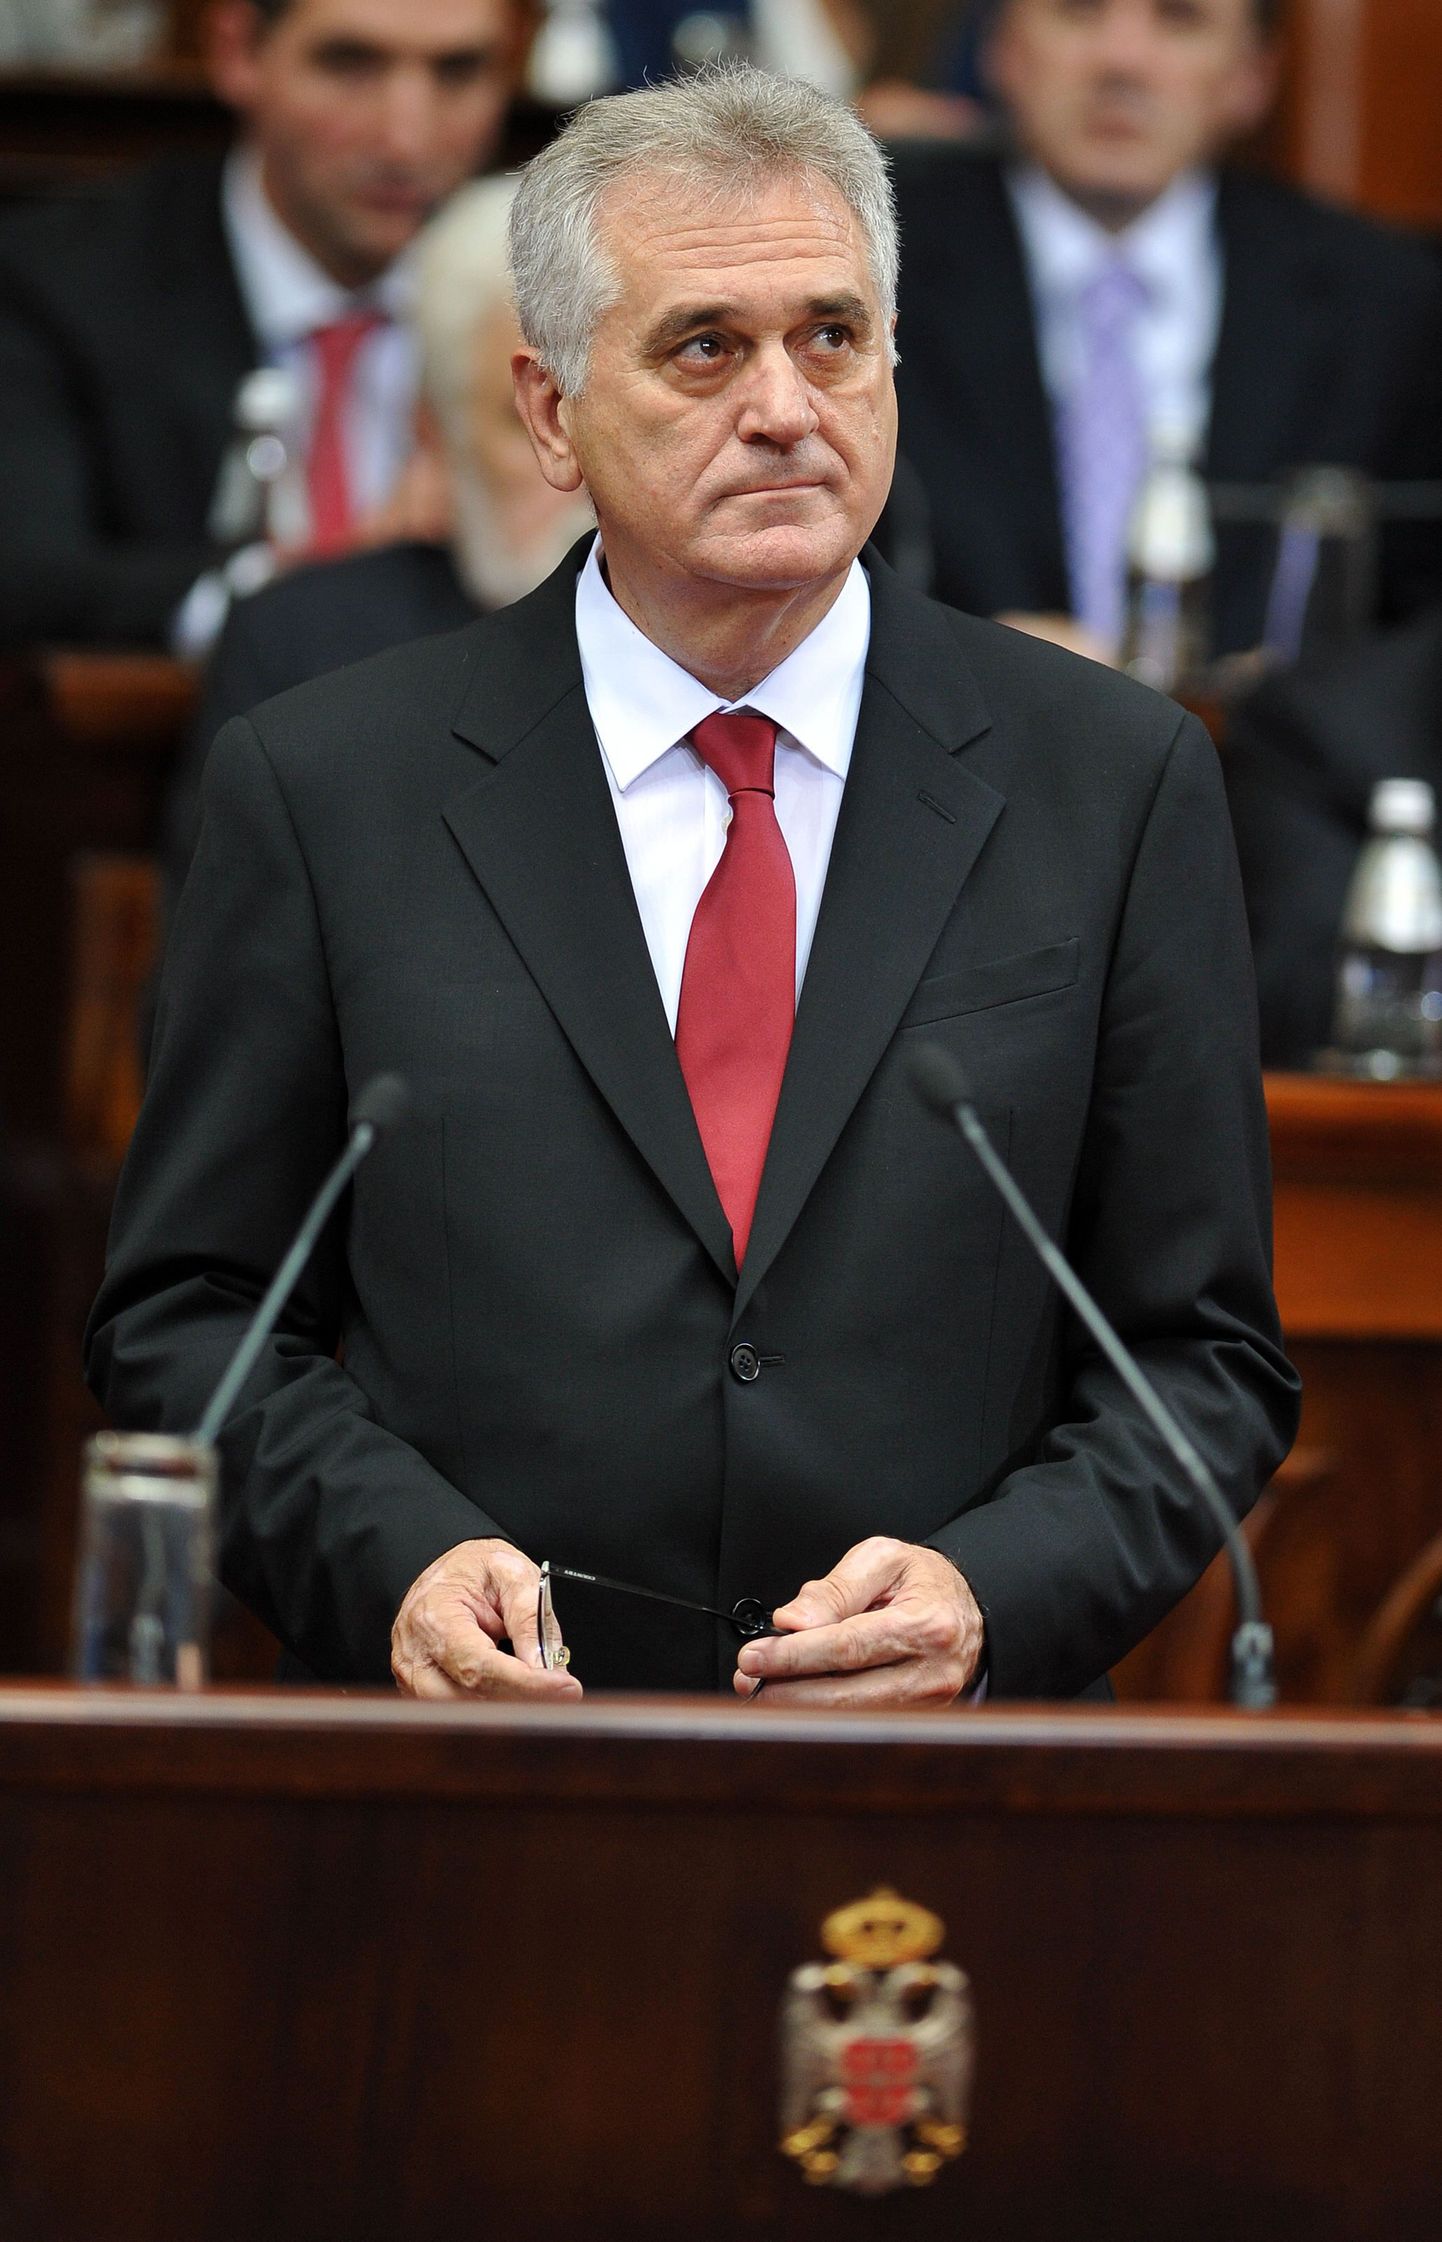 Serbia president Tomislav Nikolic